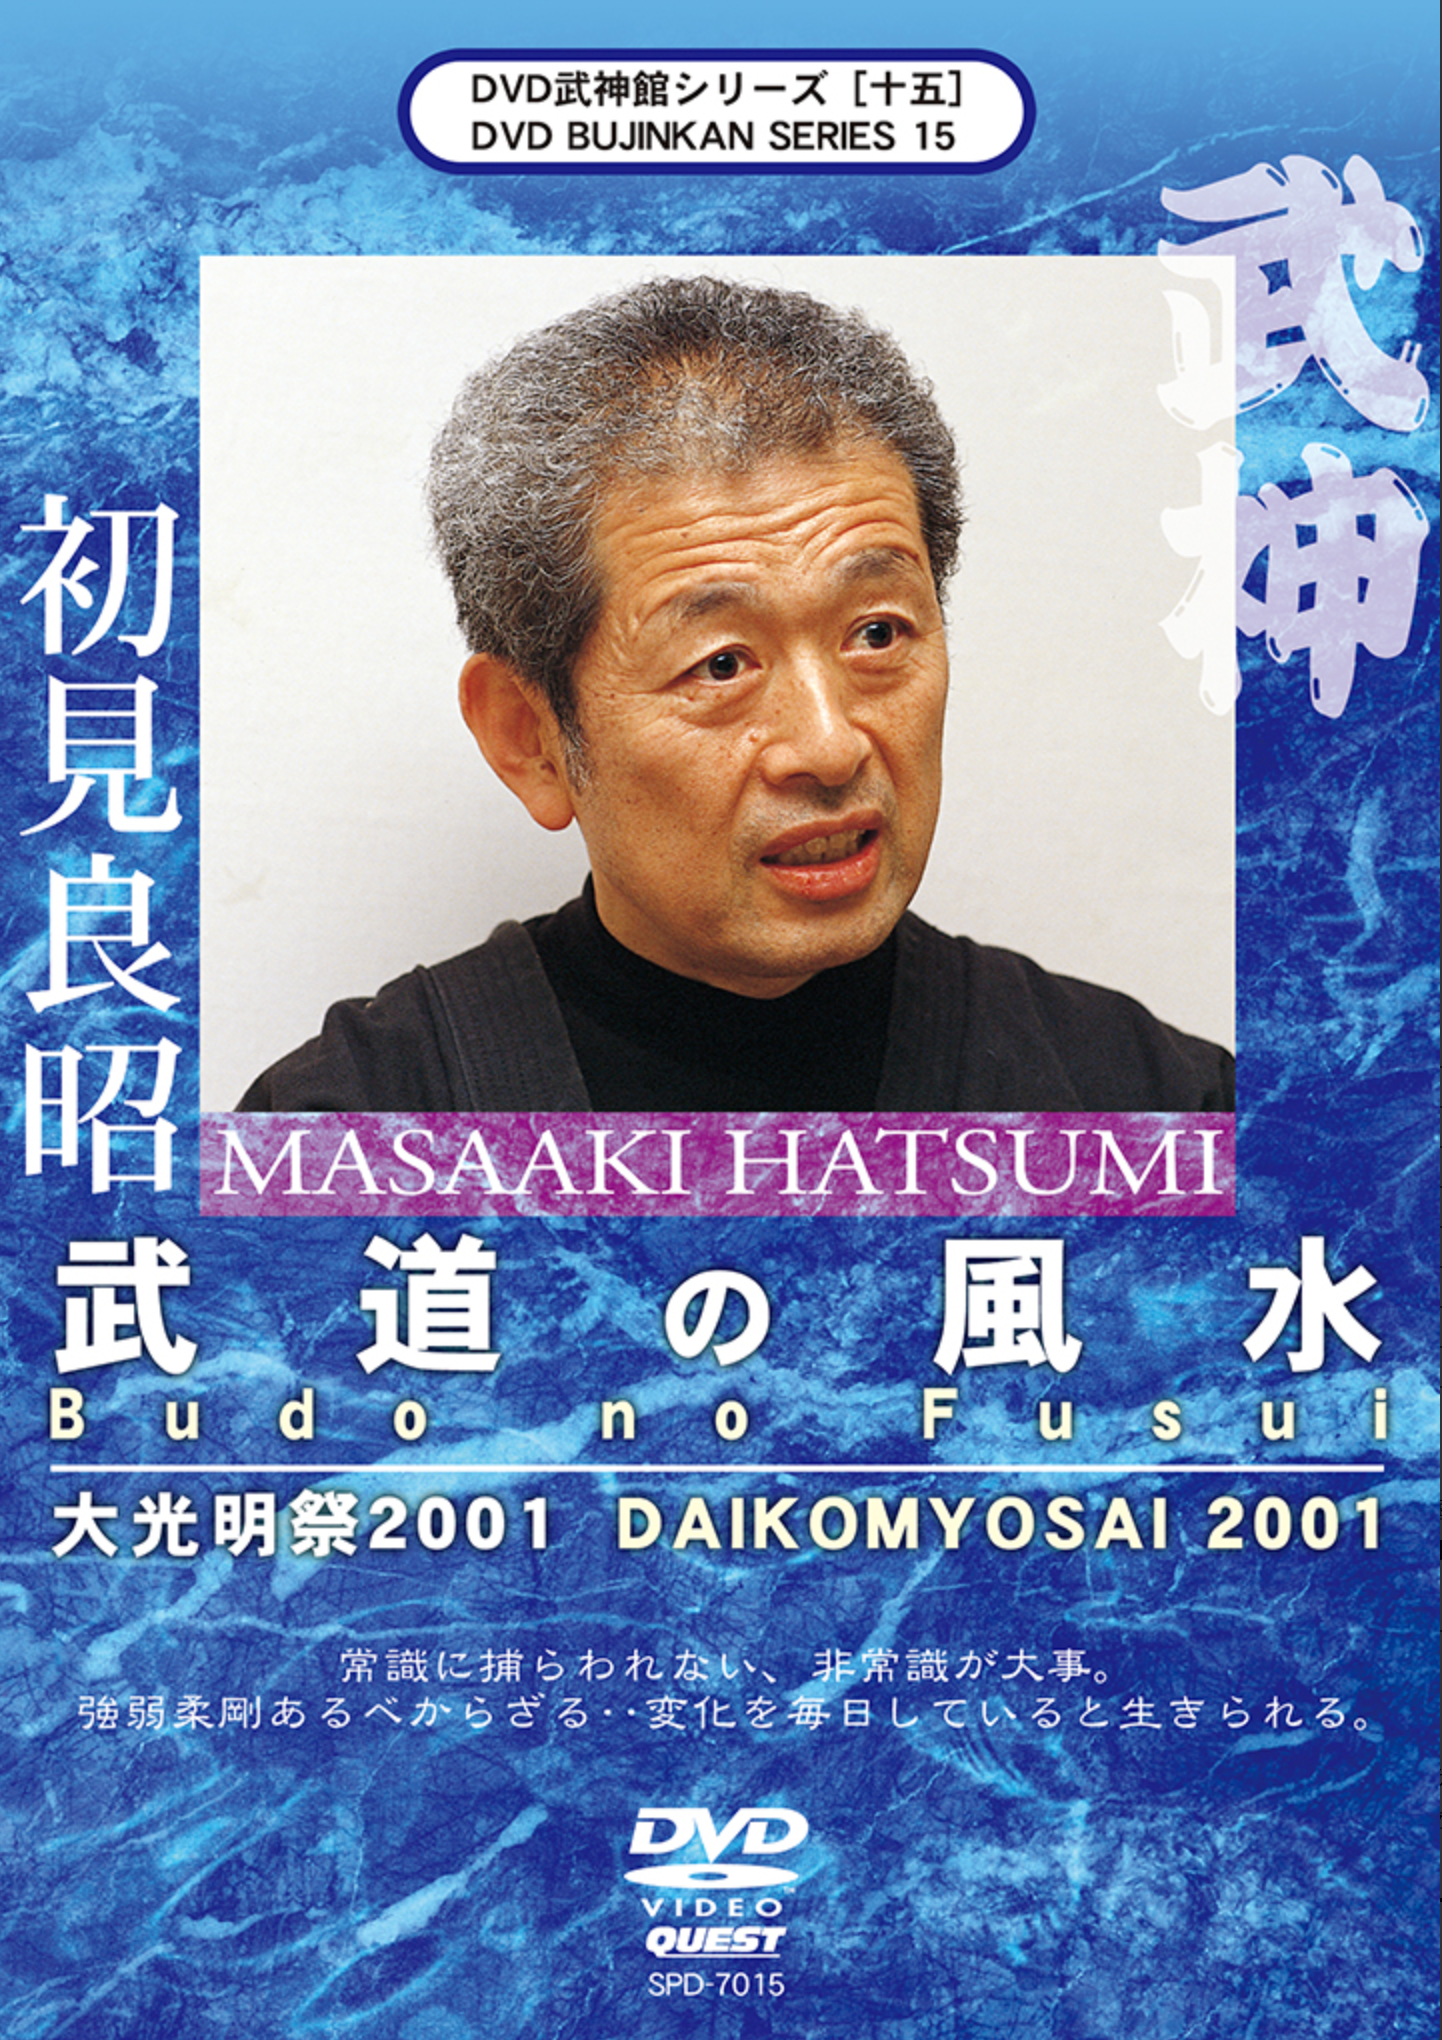 Bujinkan DVD Series 15: Budo no Fusui with Masaaki Hatsumi - Budovideos Inc